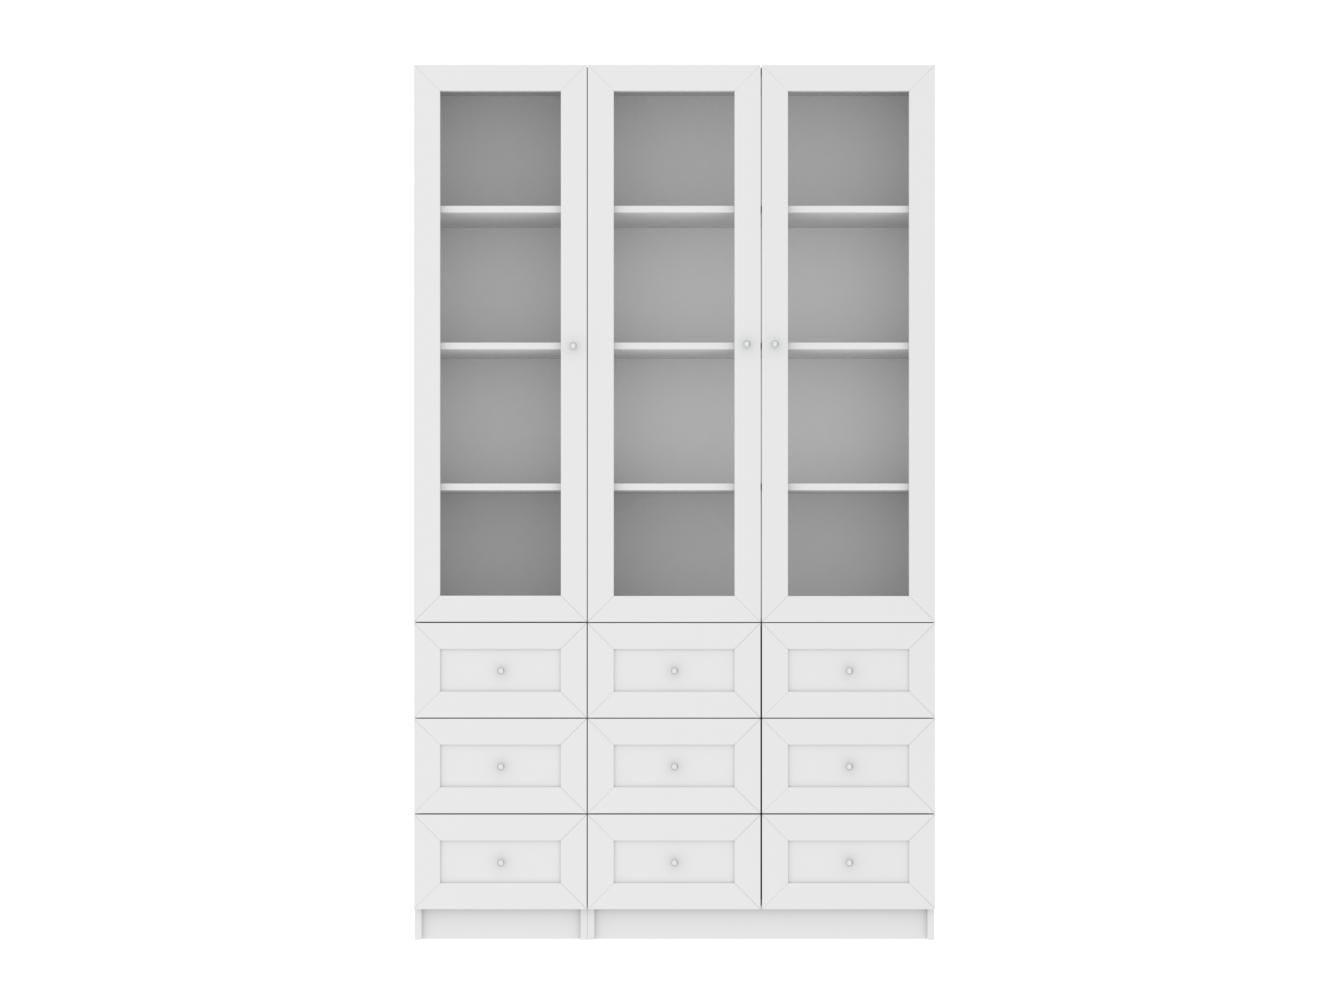 Книжный шкаф Билли 326 white ИКЕА (IKEA) изображение товара